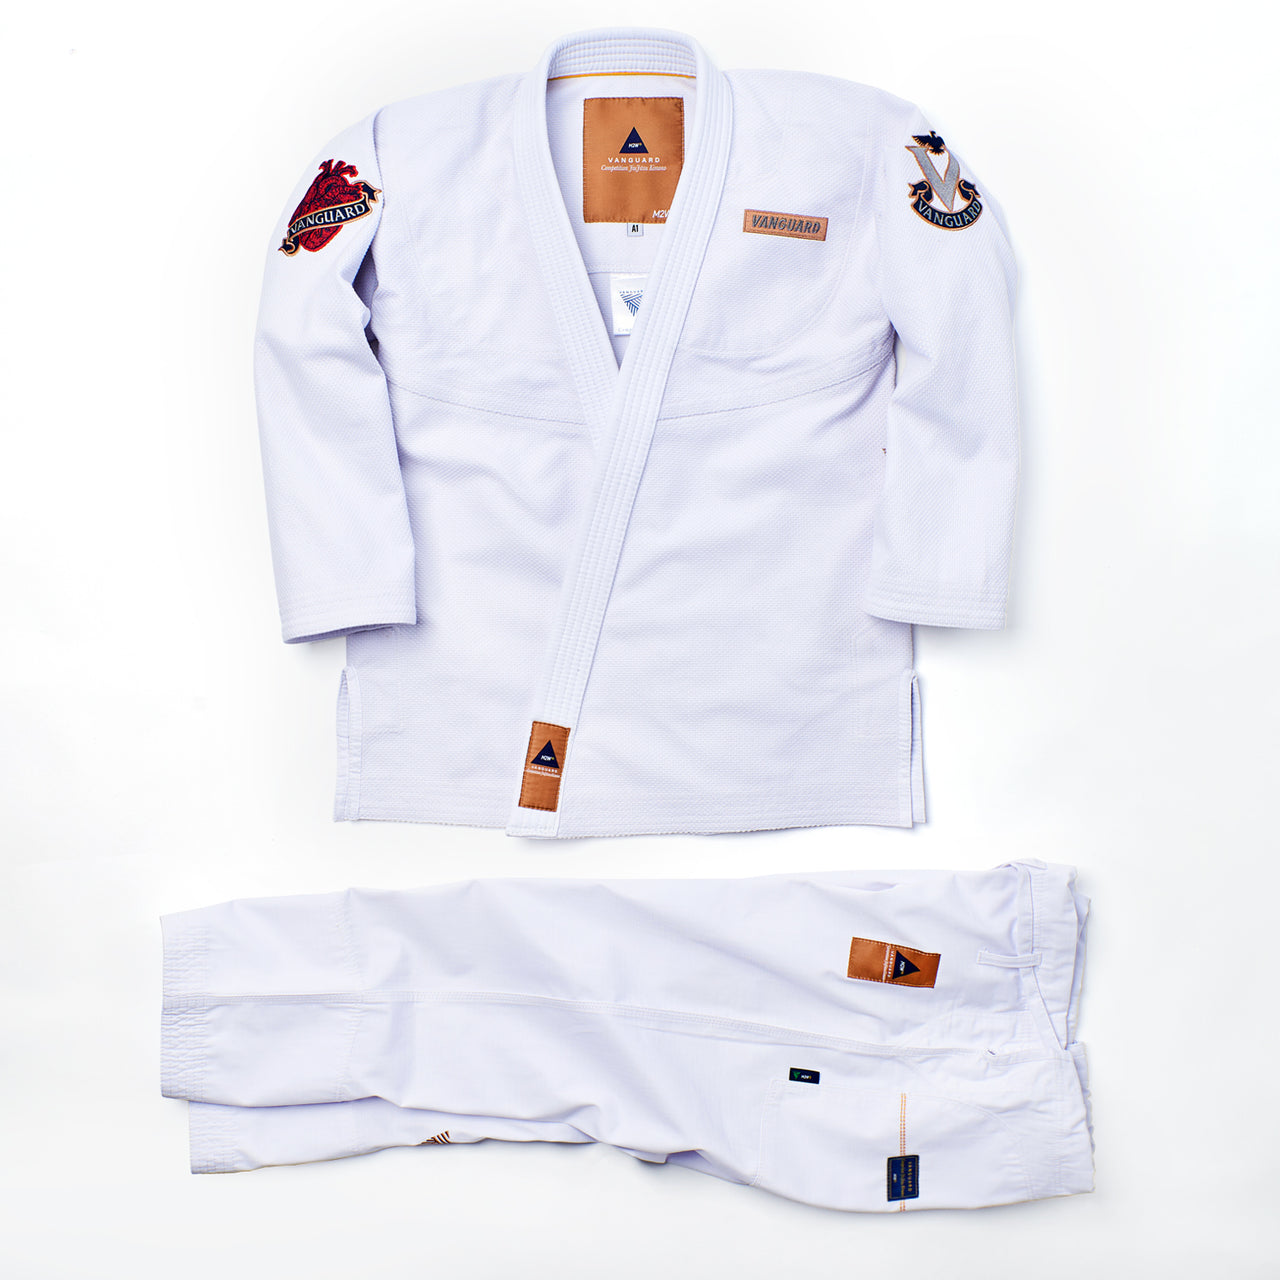 VANGUARD / COMPETITORE ROSE GOLD 柔術衣 WHITE